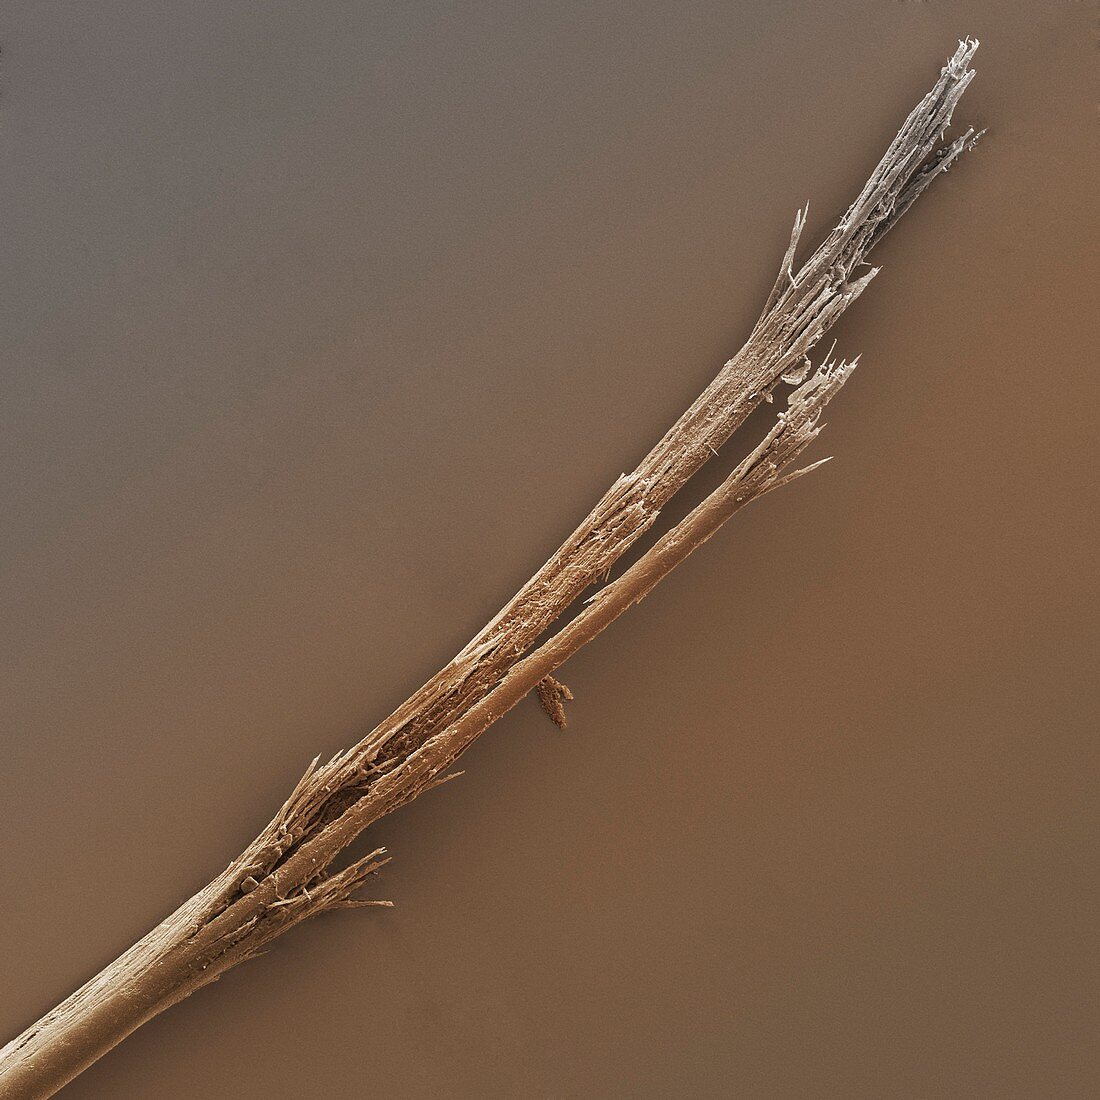 Human hair shaft with split ends SEM